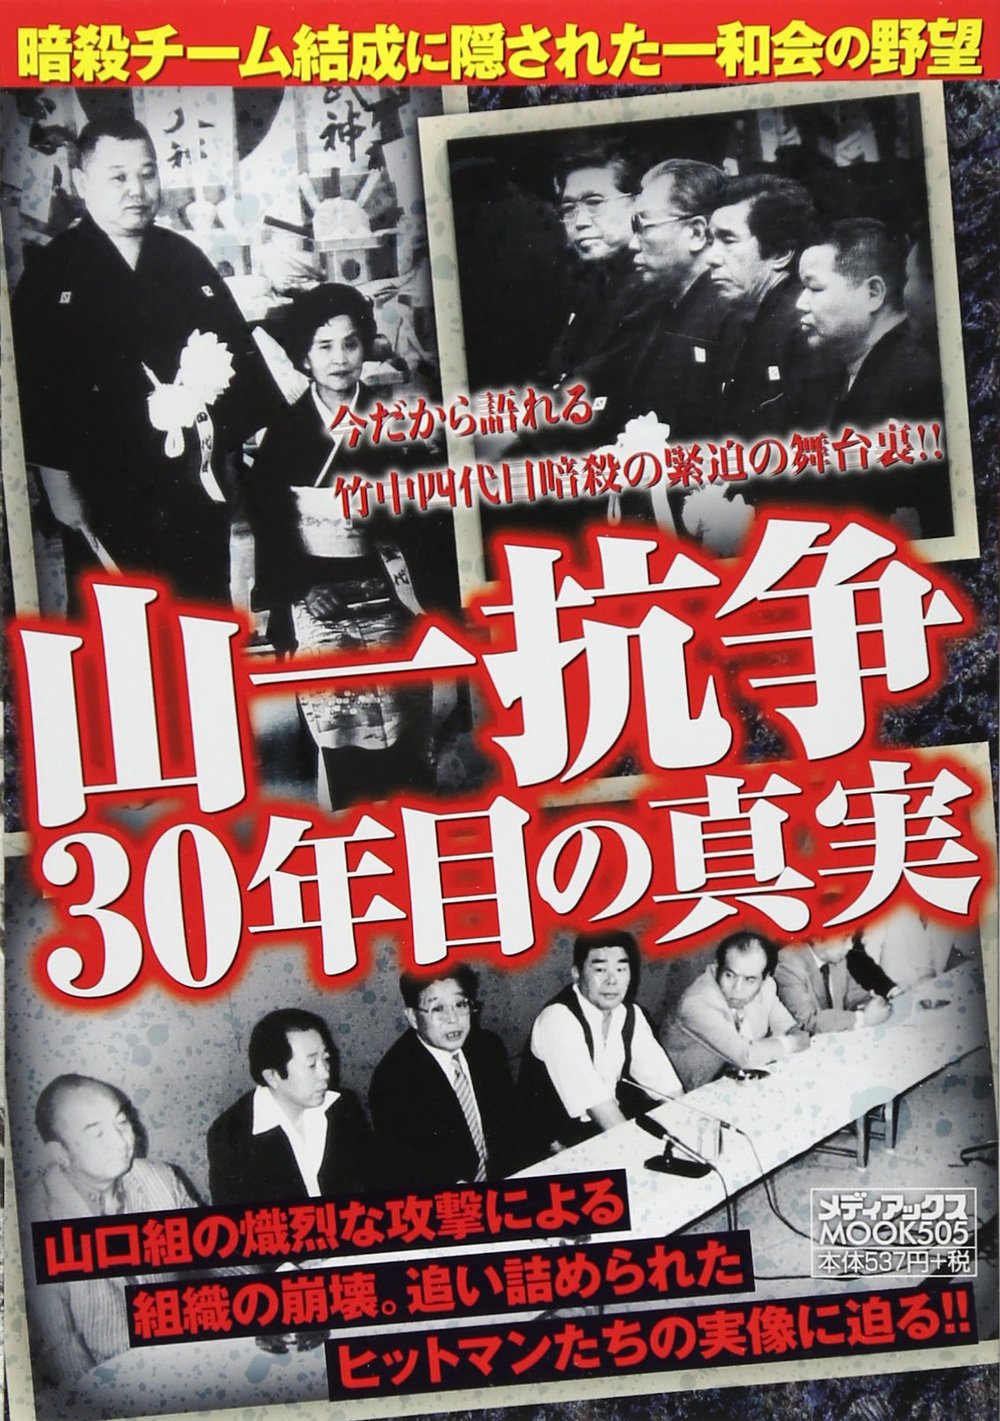 Anton Kusters photos show inside Japan's yakuza crime underworld